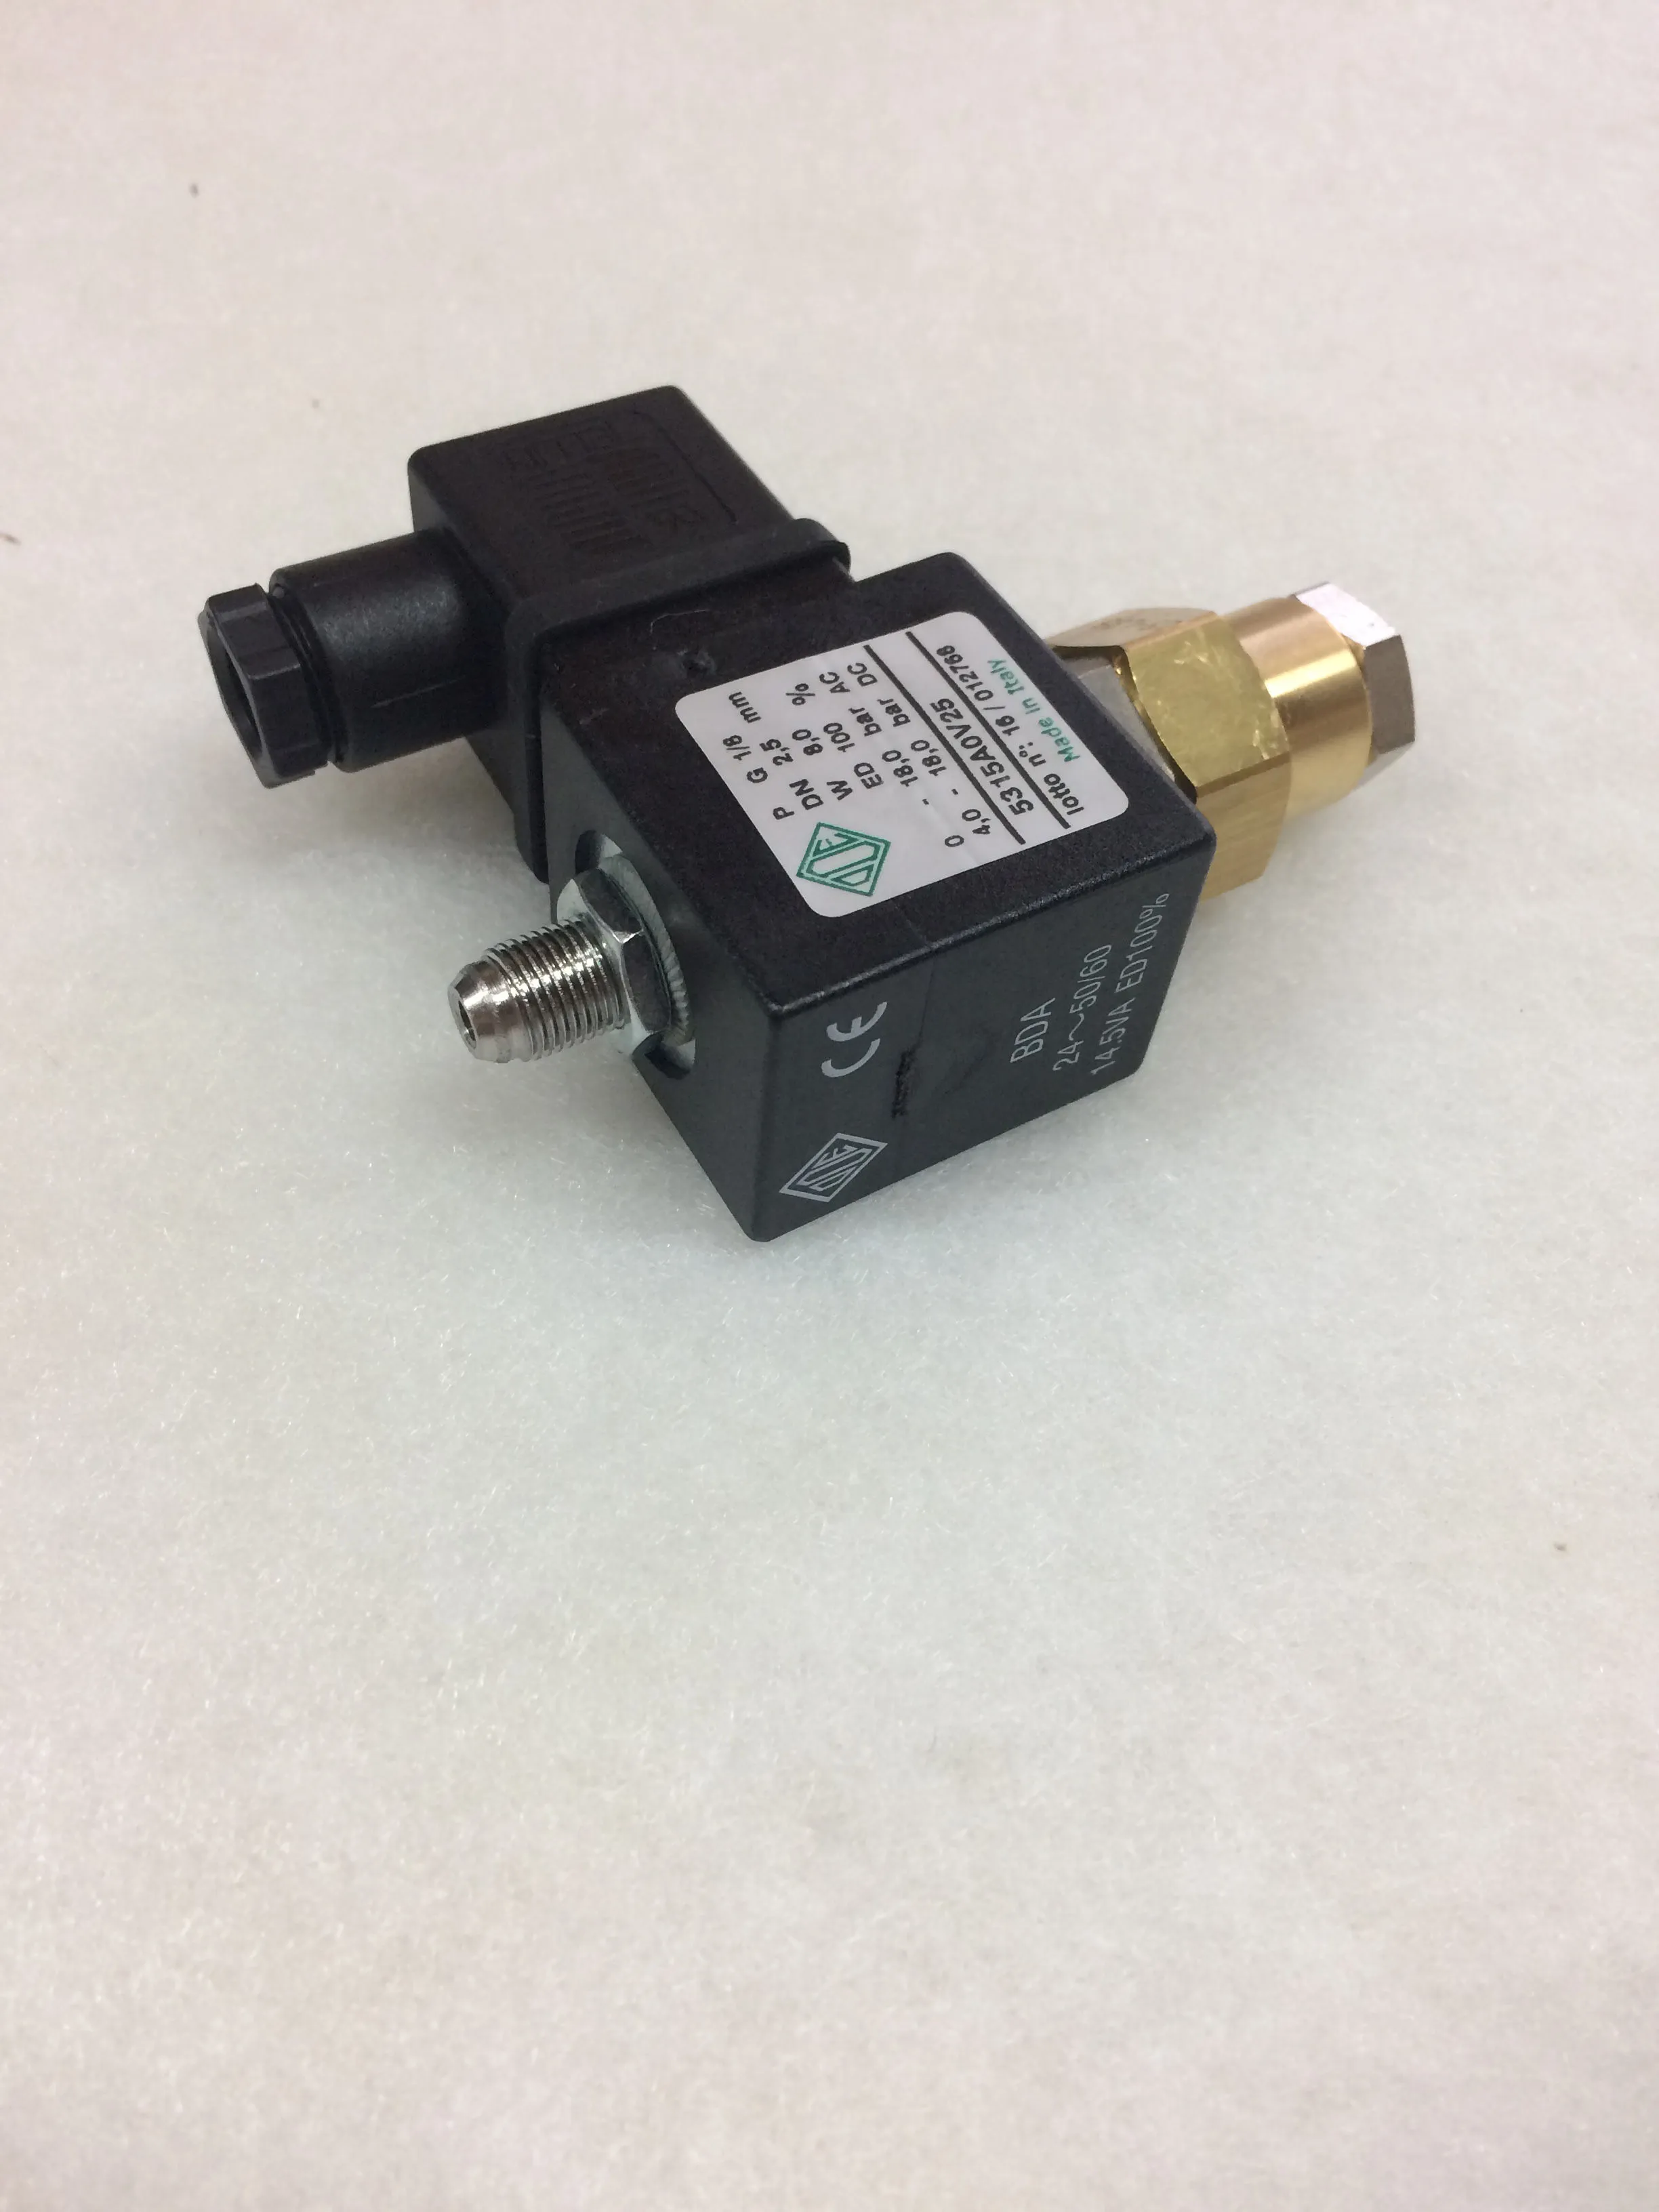 02267V01 Solenoid valve 24V AC 1/4" for RH10 - RH25 image 1